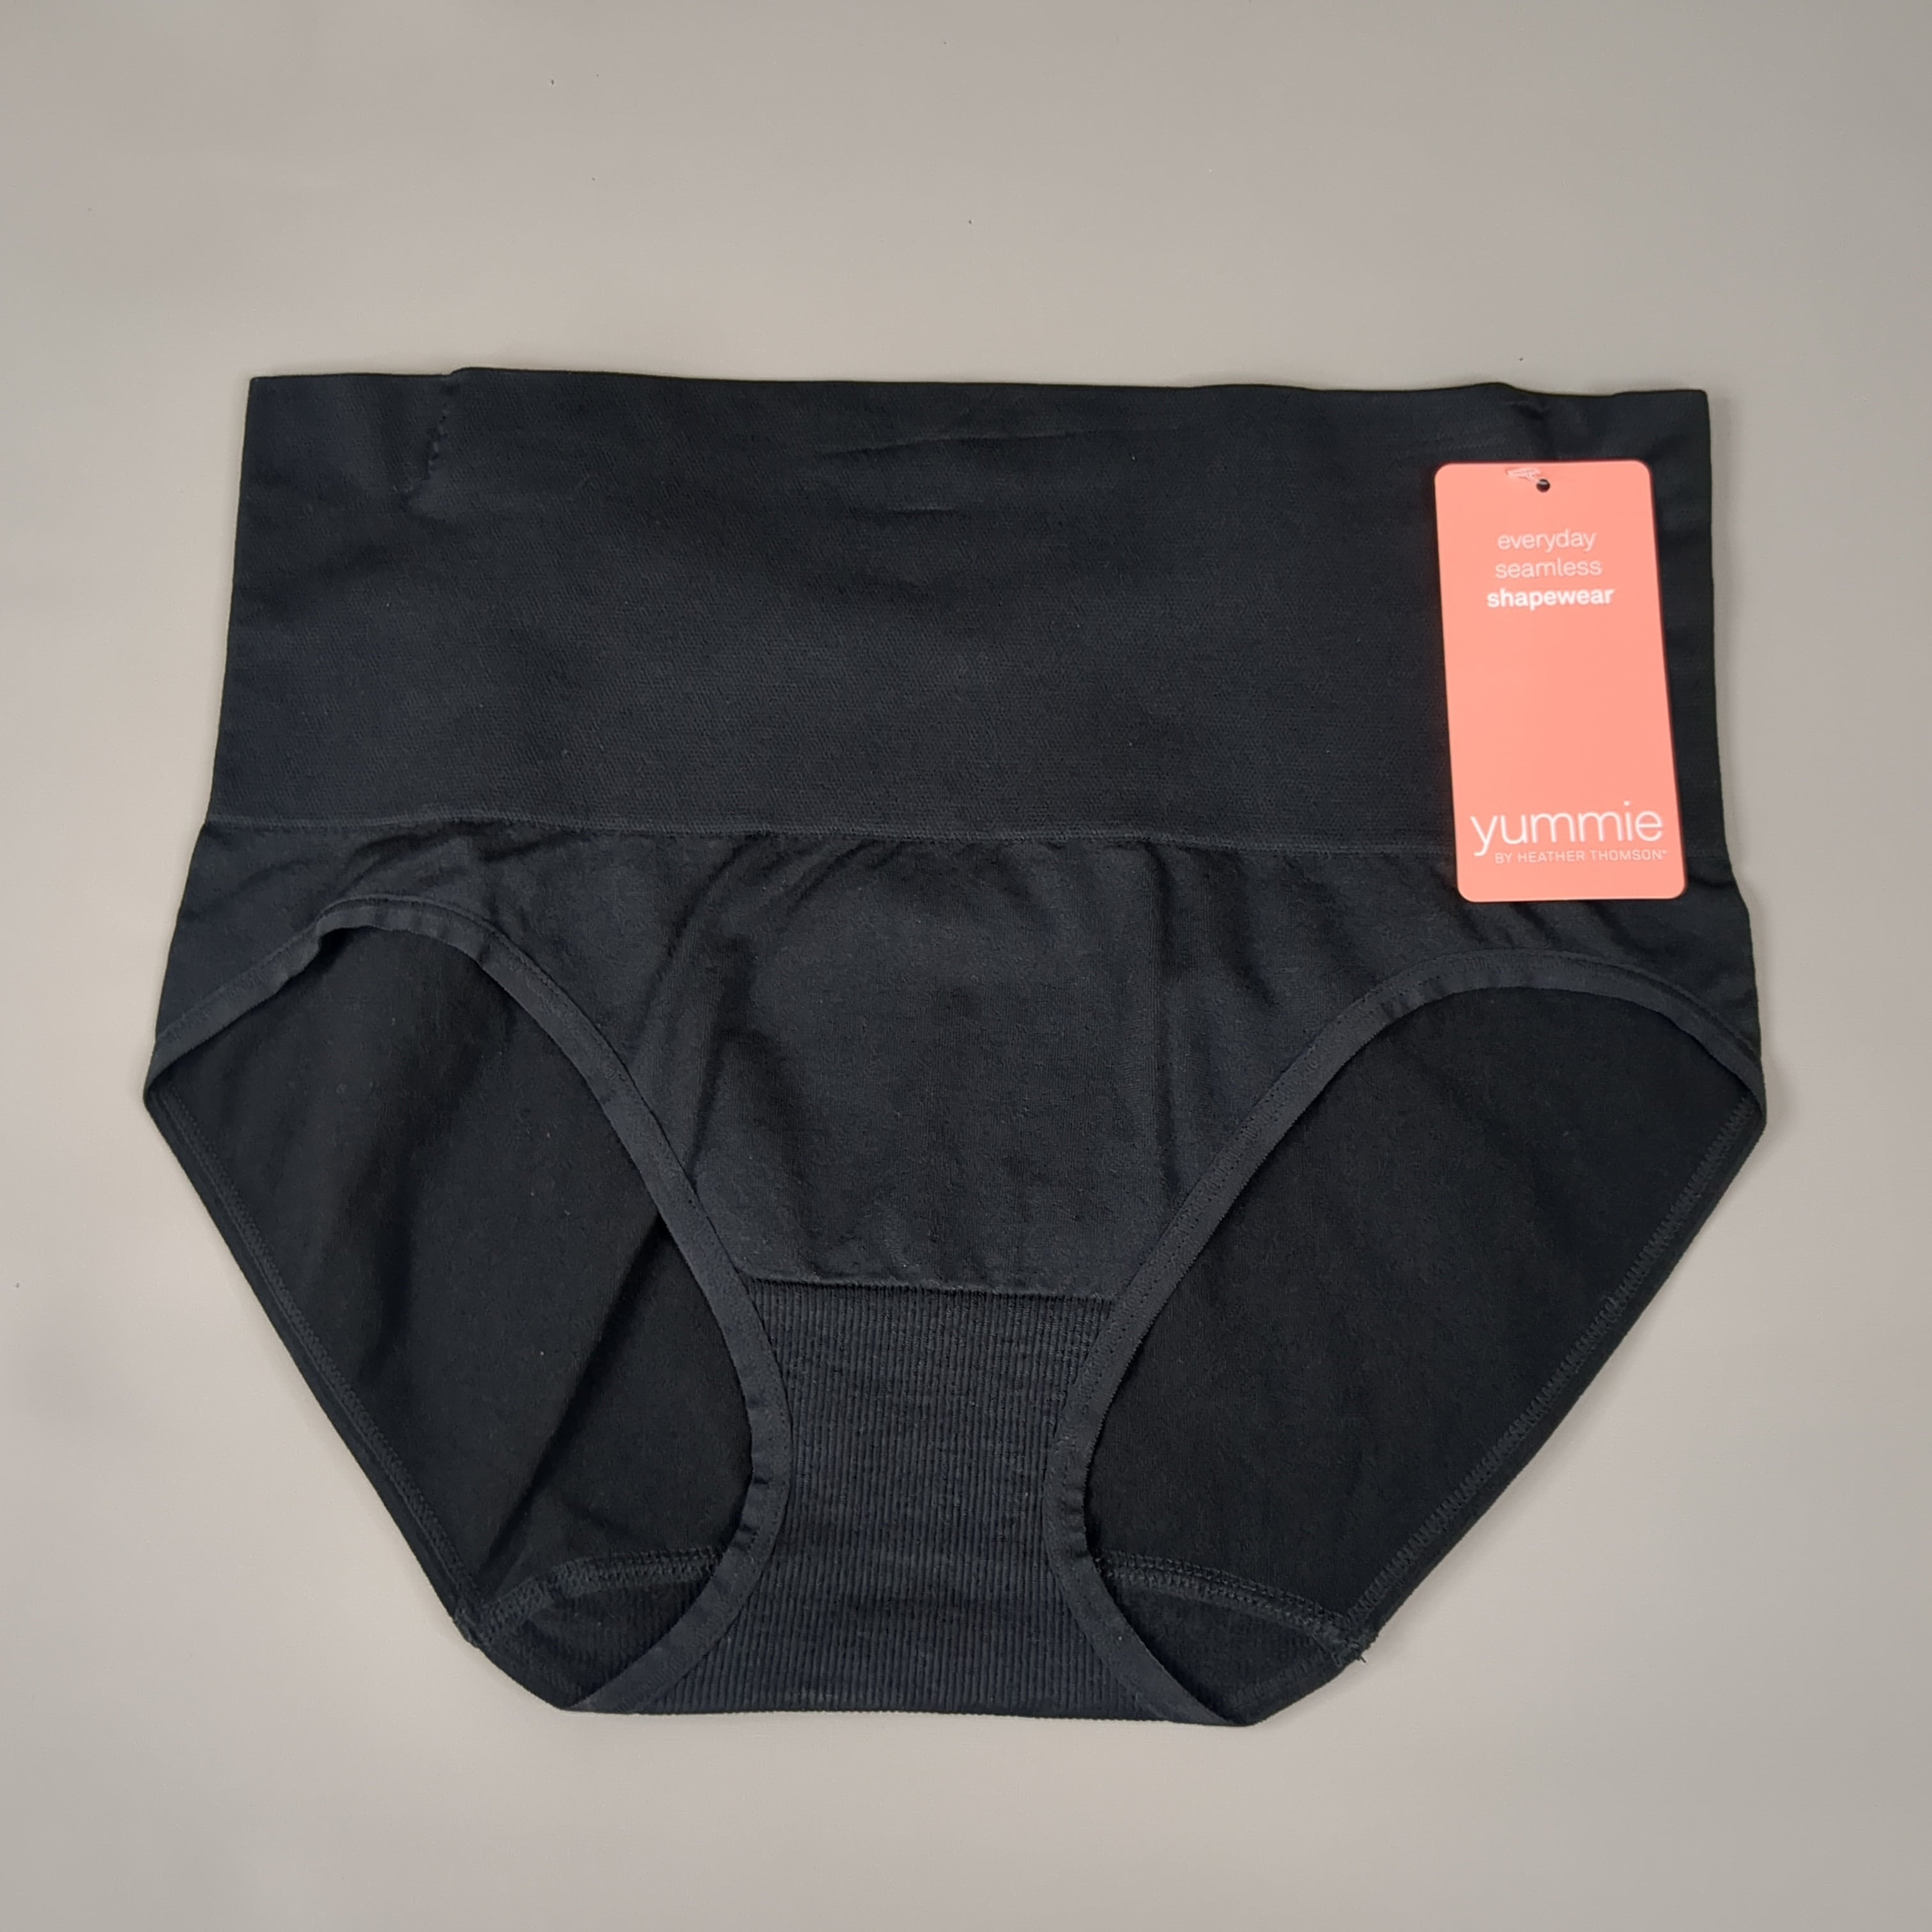 YUMMIE Nylon Brief Women's Underwear Sz L/XL Black YT6-576 (New